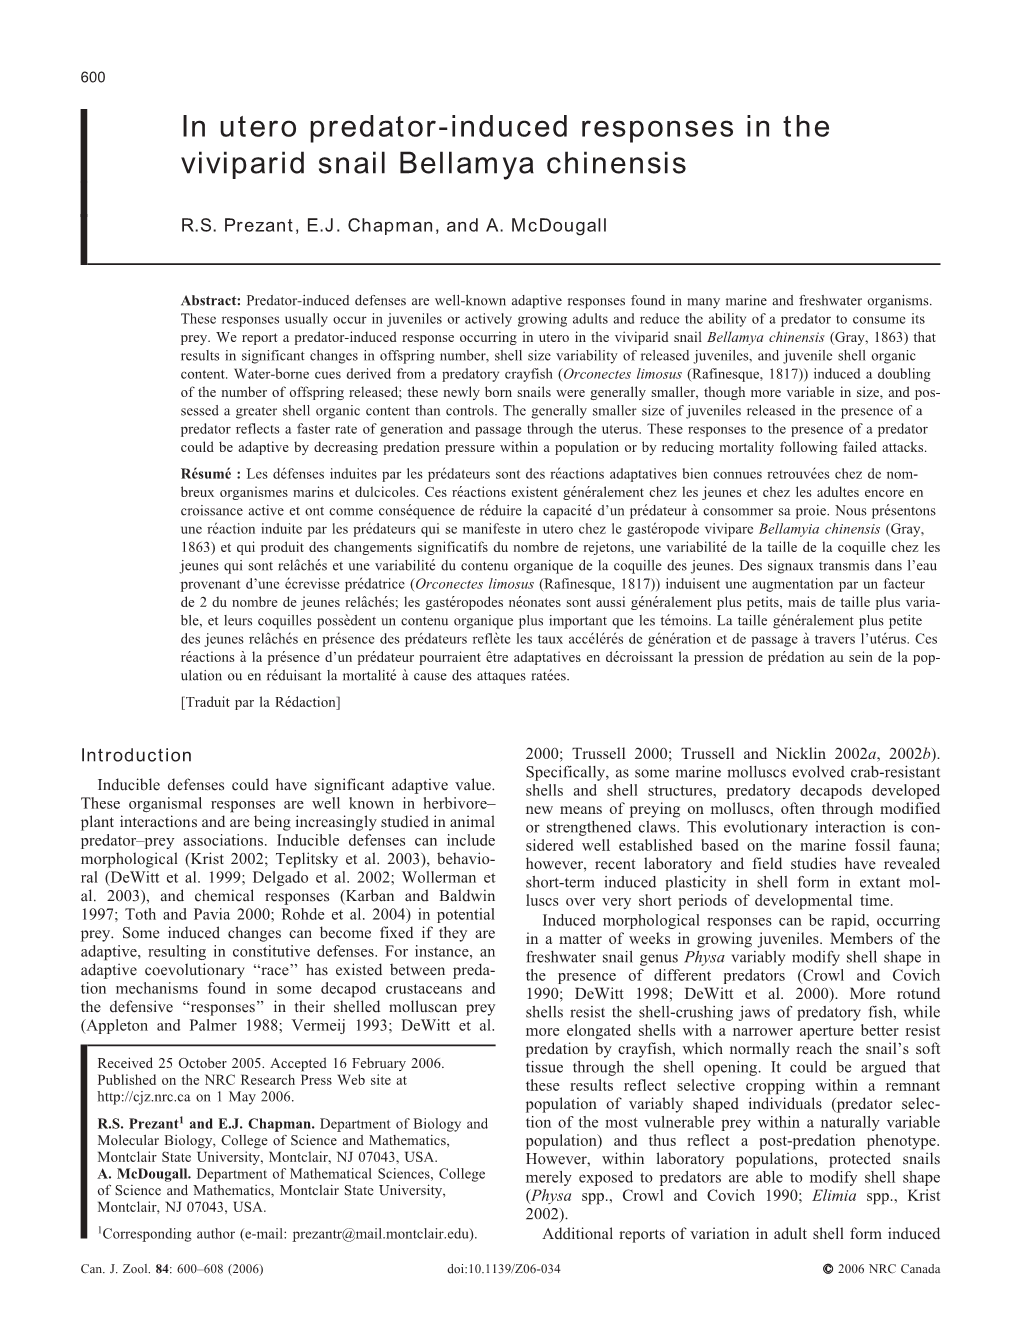 In Utero Predator-Induced Responses in the Viviparid Snail Bellamya Chinensis